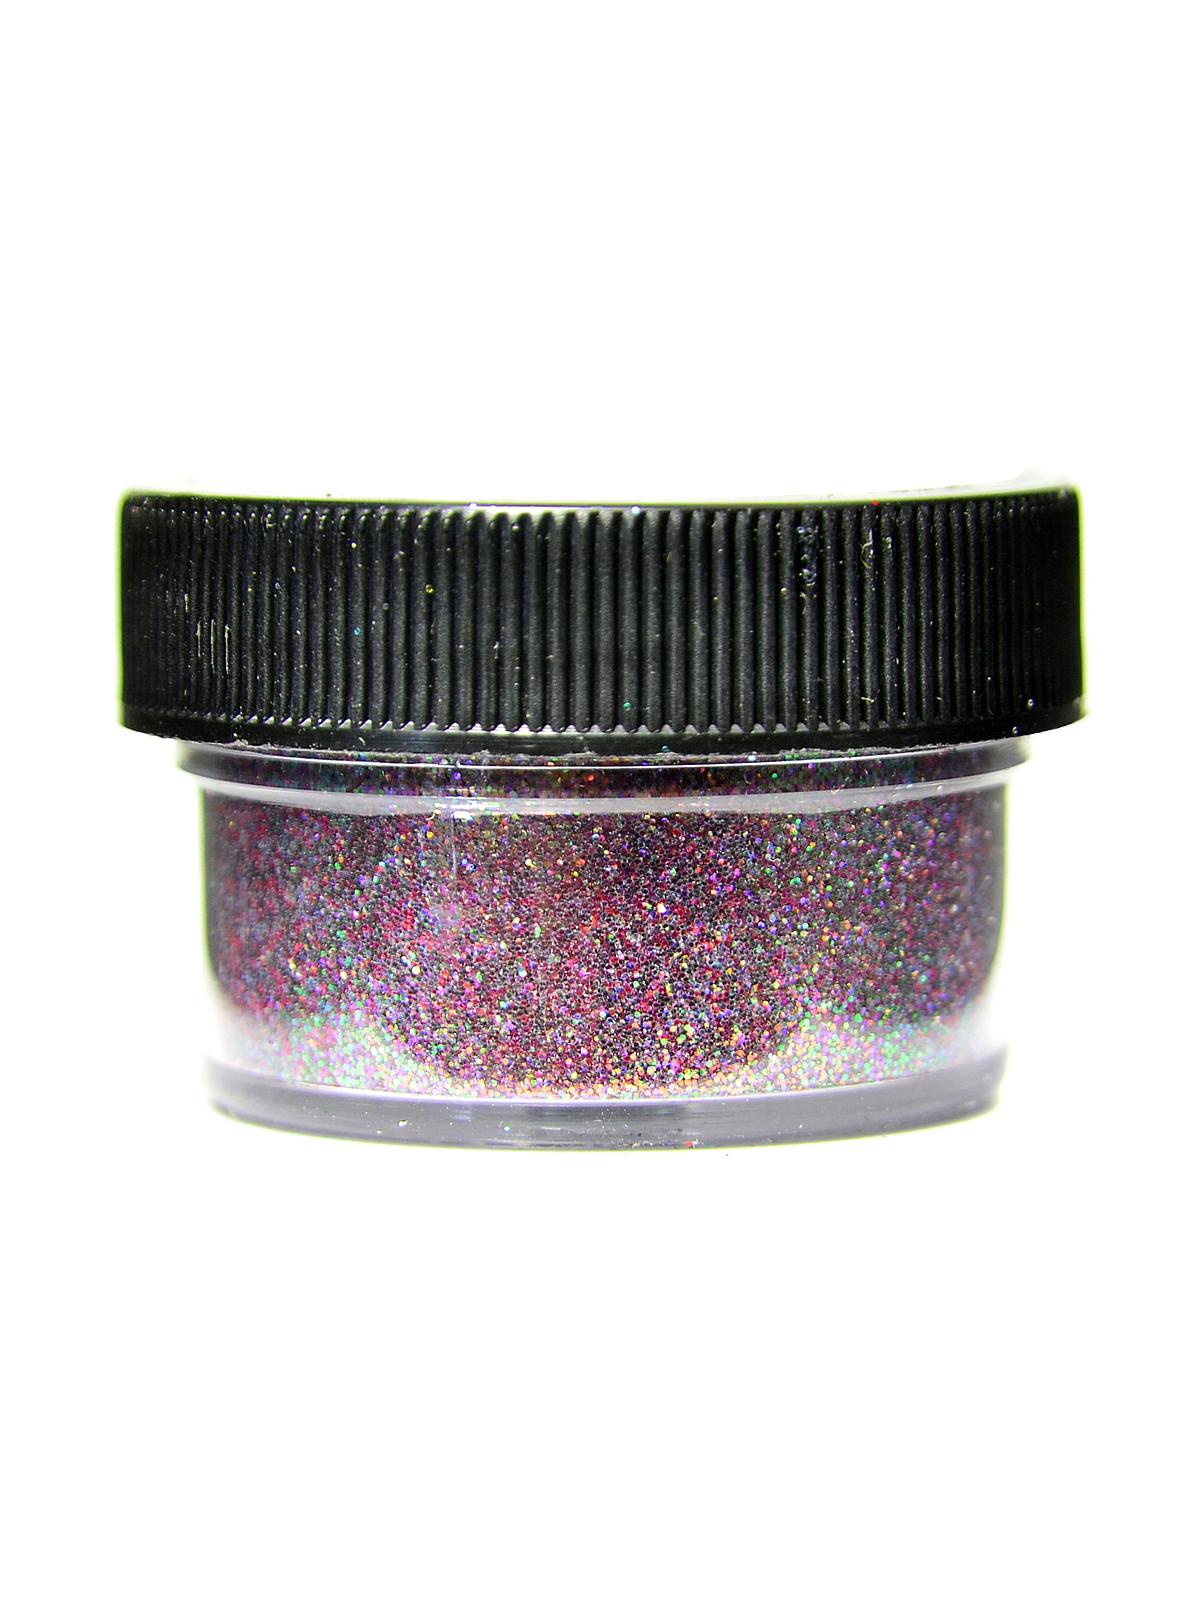 Ultrafine Transparent Glitter Plum Loco 1 2 Oz. Jar